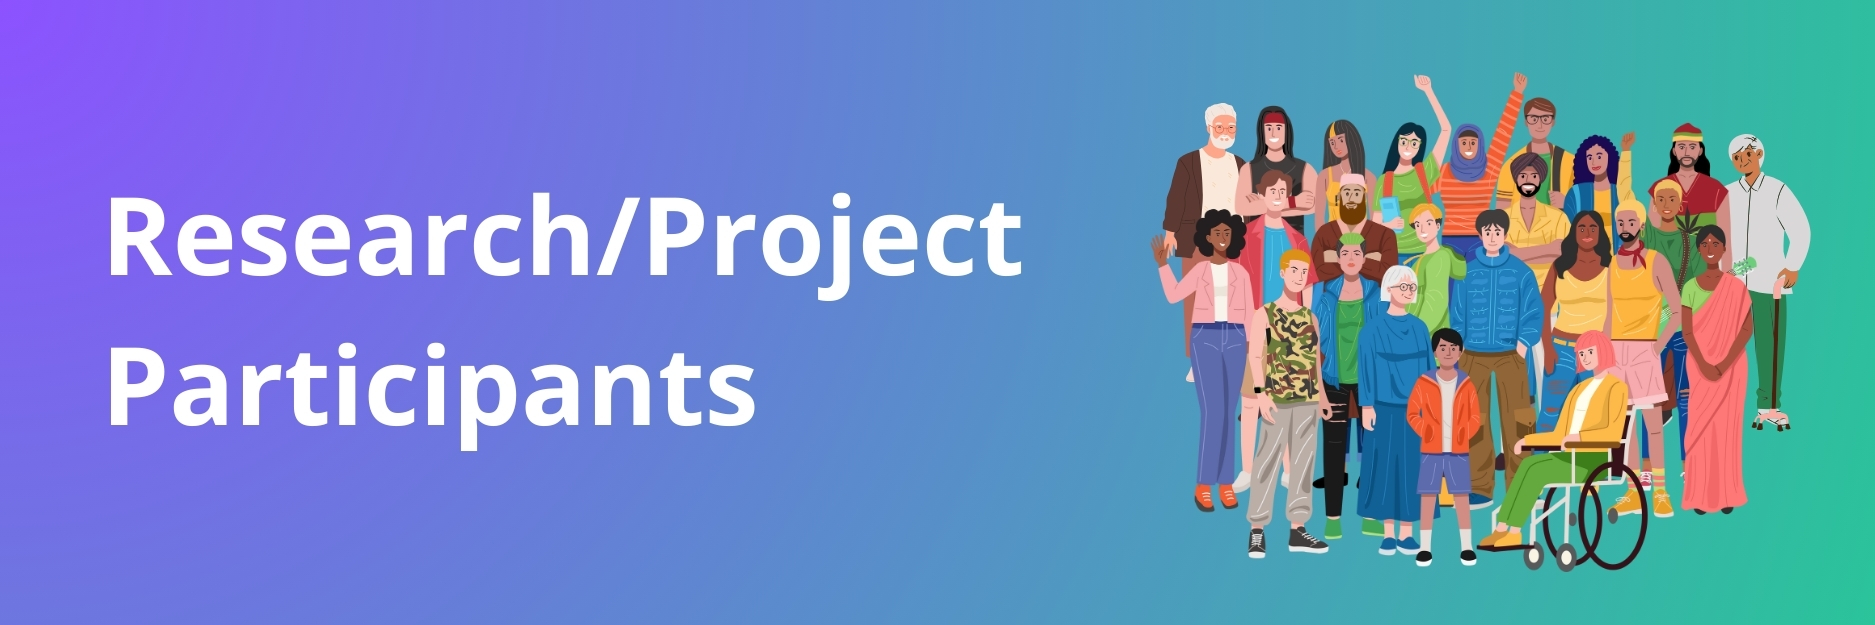 research/project participants